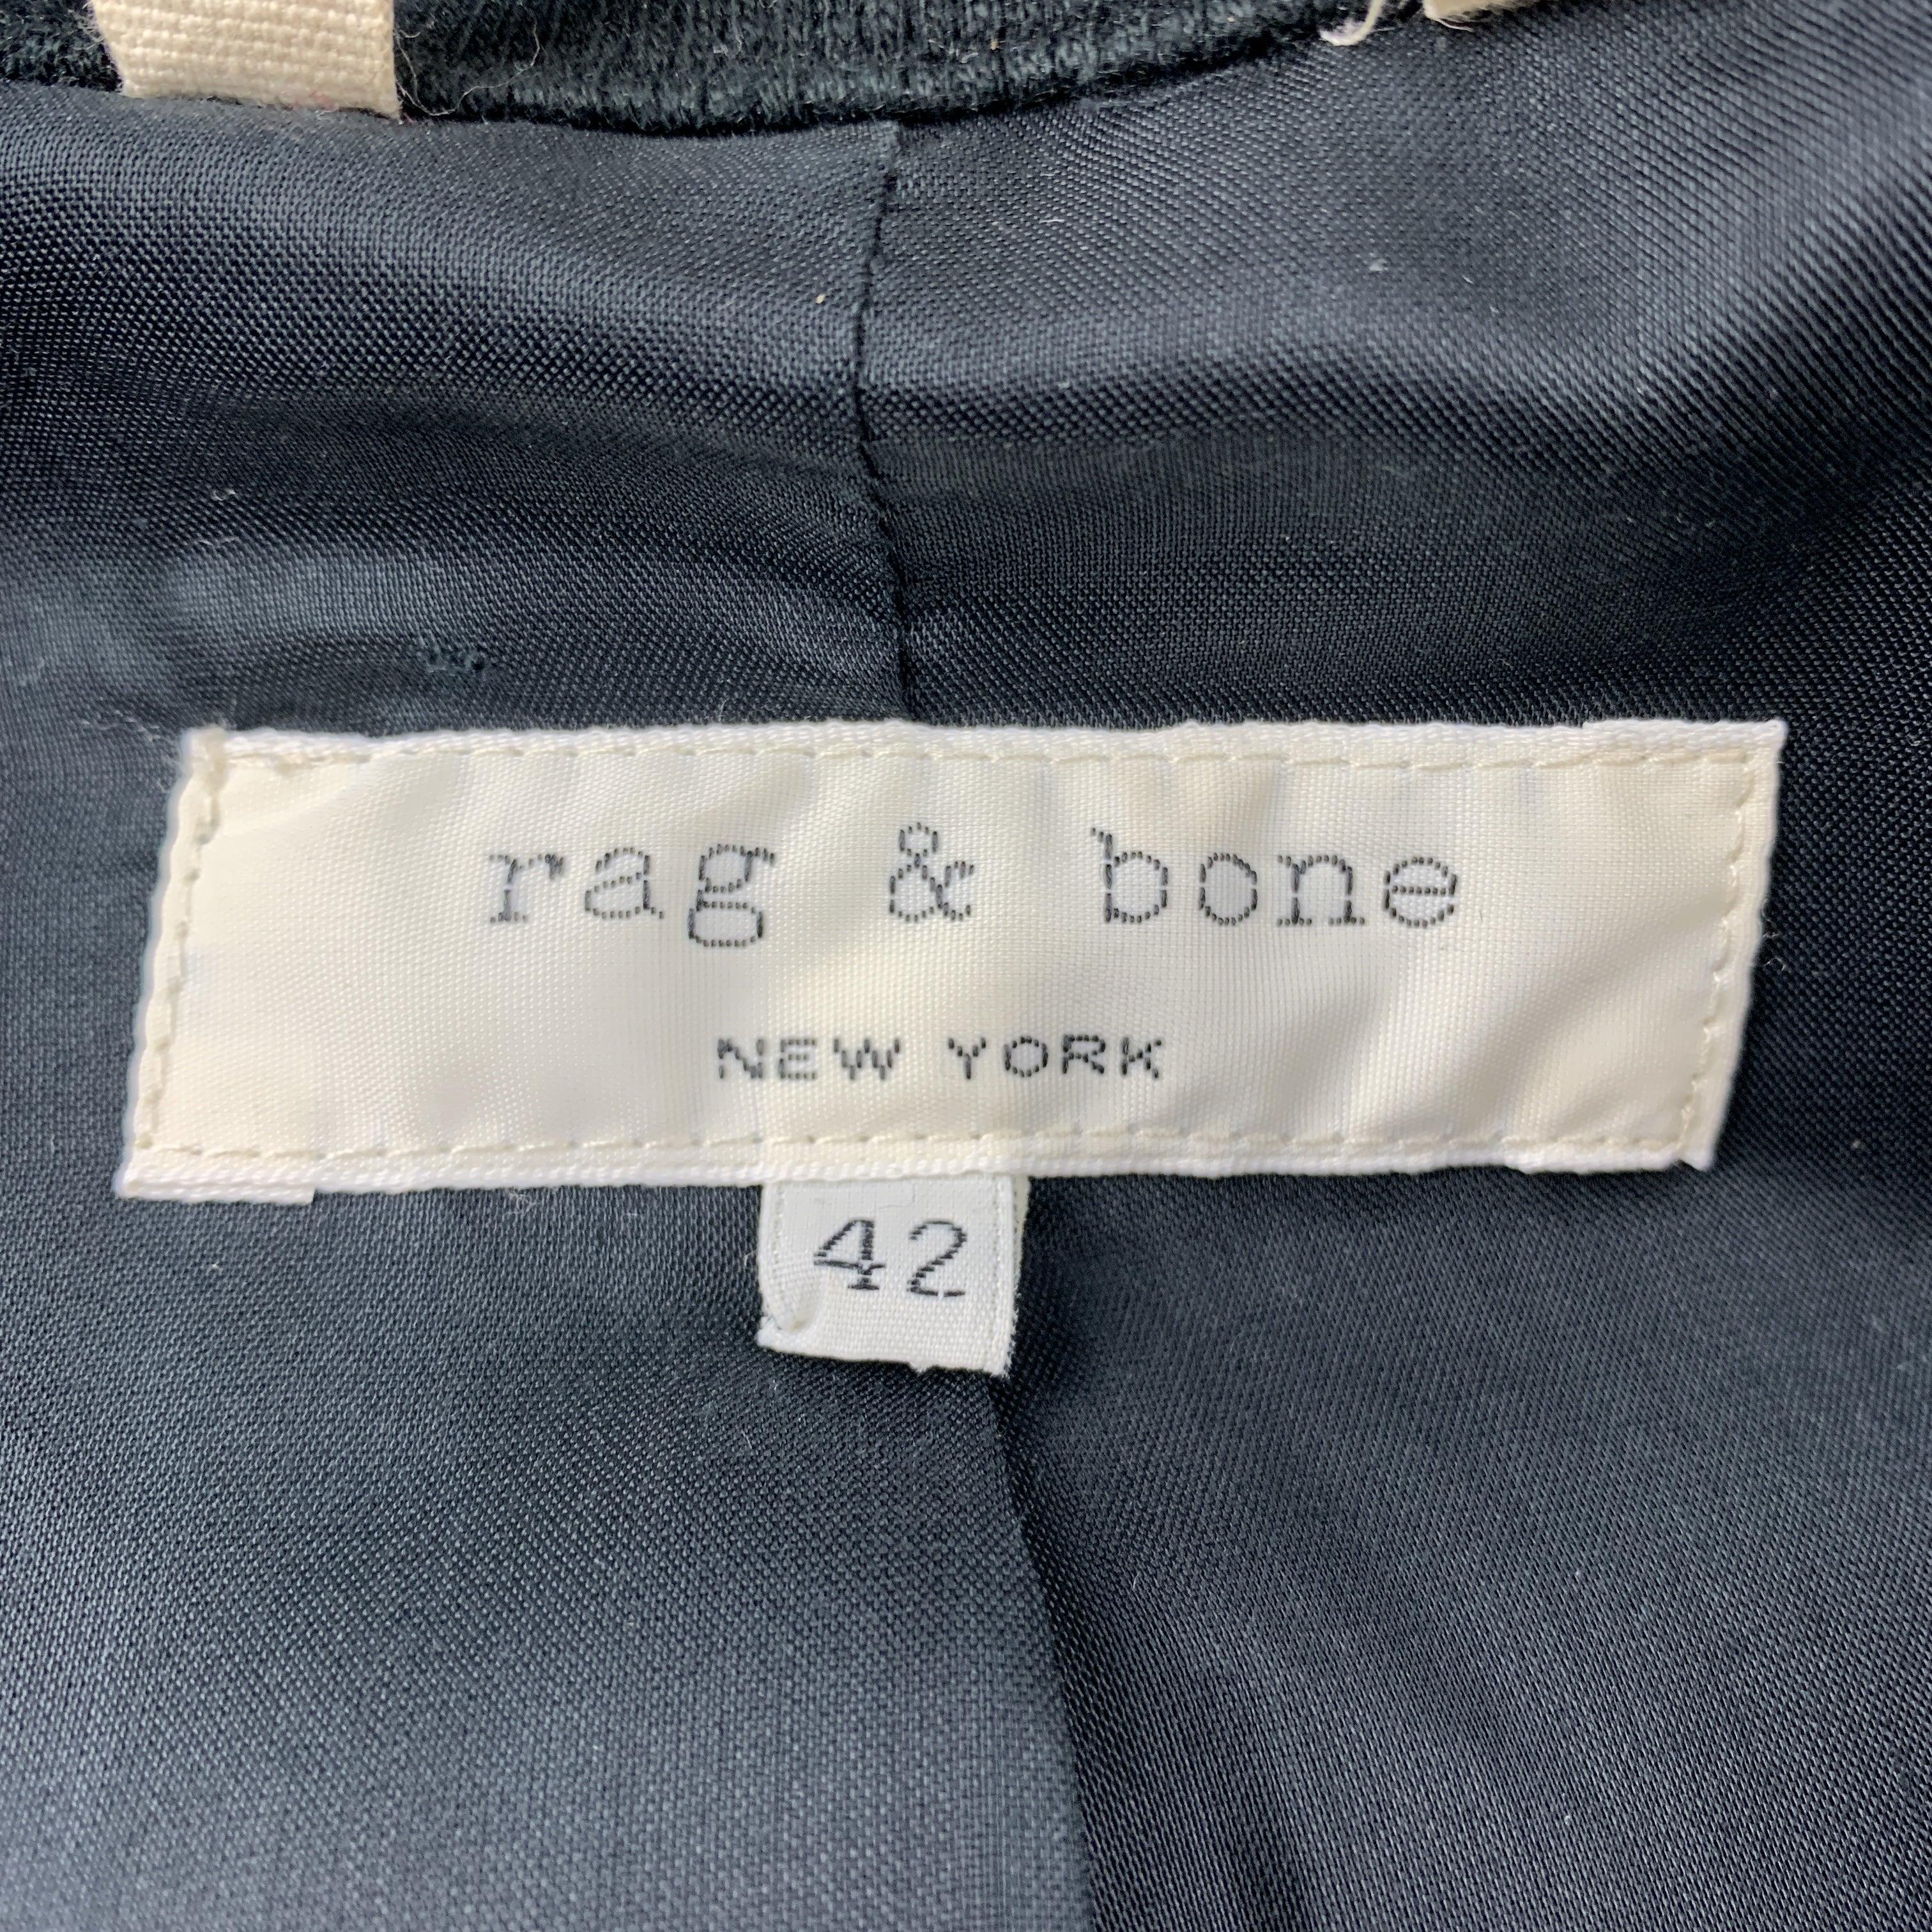 RAG & BONE Size 42 Black Solid Nylon Zip Up Jacket For Sale 1